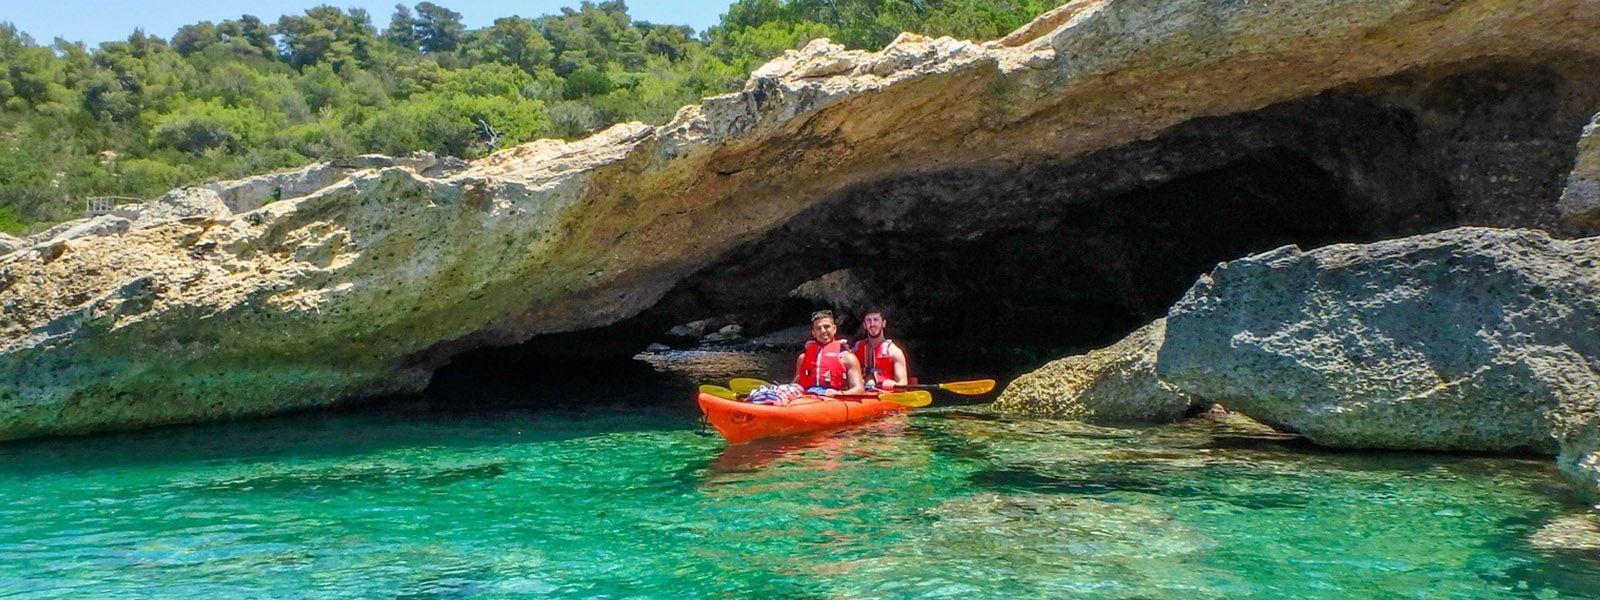 Sea Kayak - Ancient Sunken City Tour - Epidavros, Greece